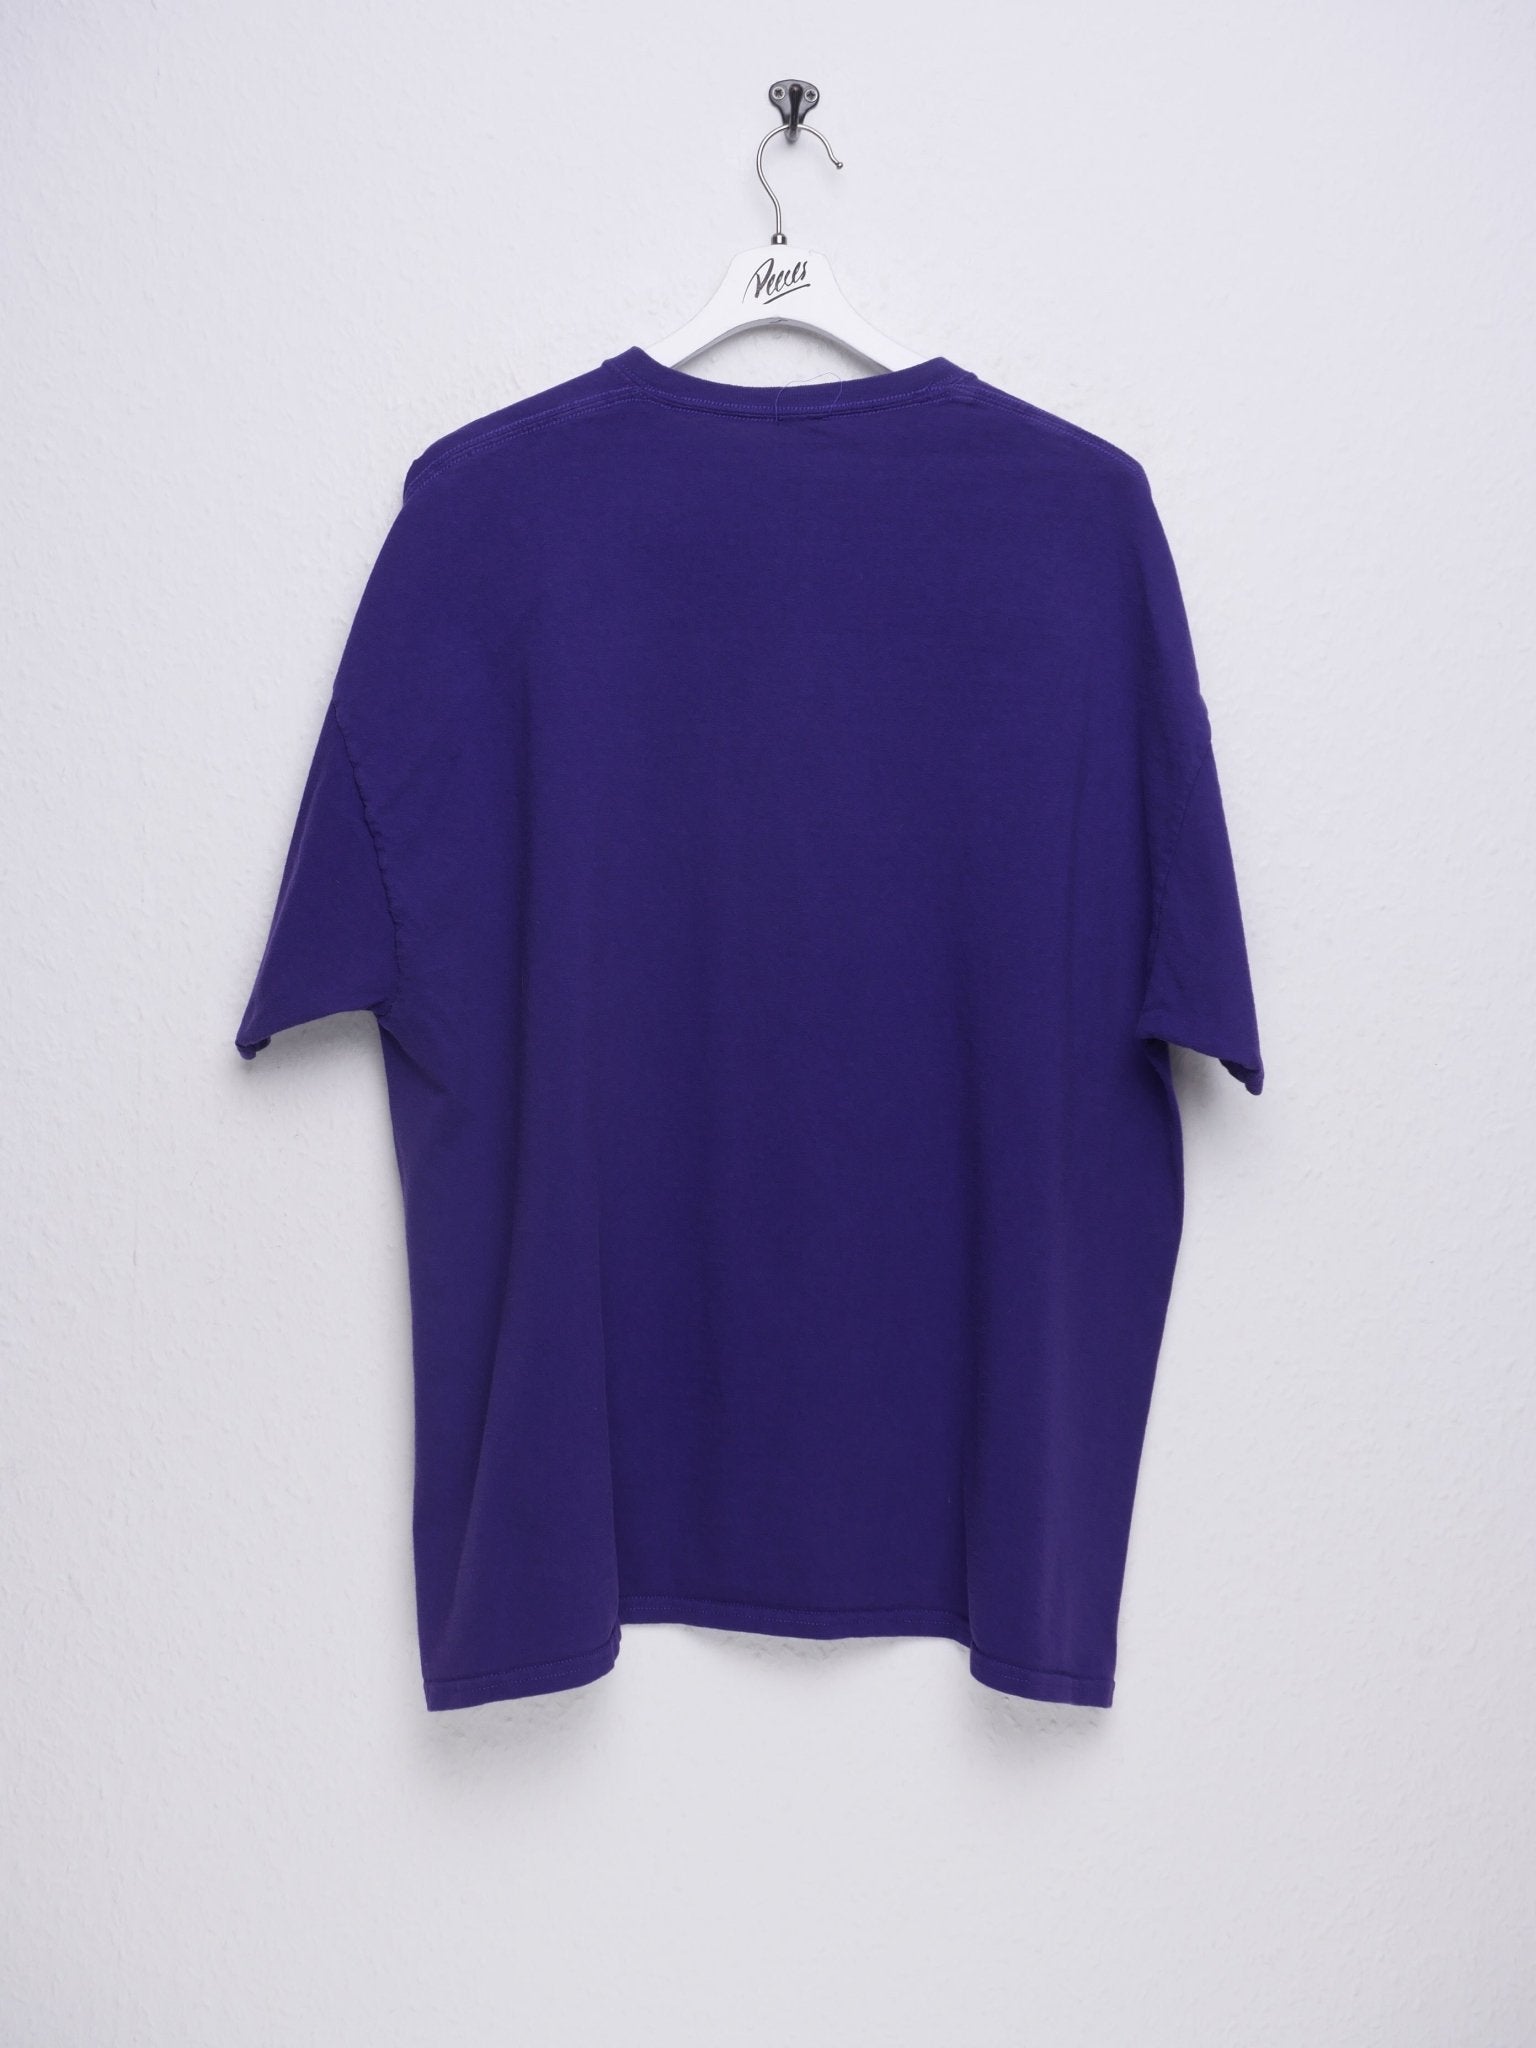 printed Pecatonica Indians purple Shirt - Peeces